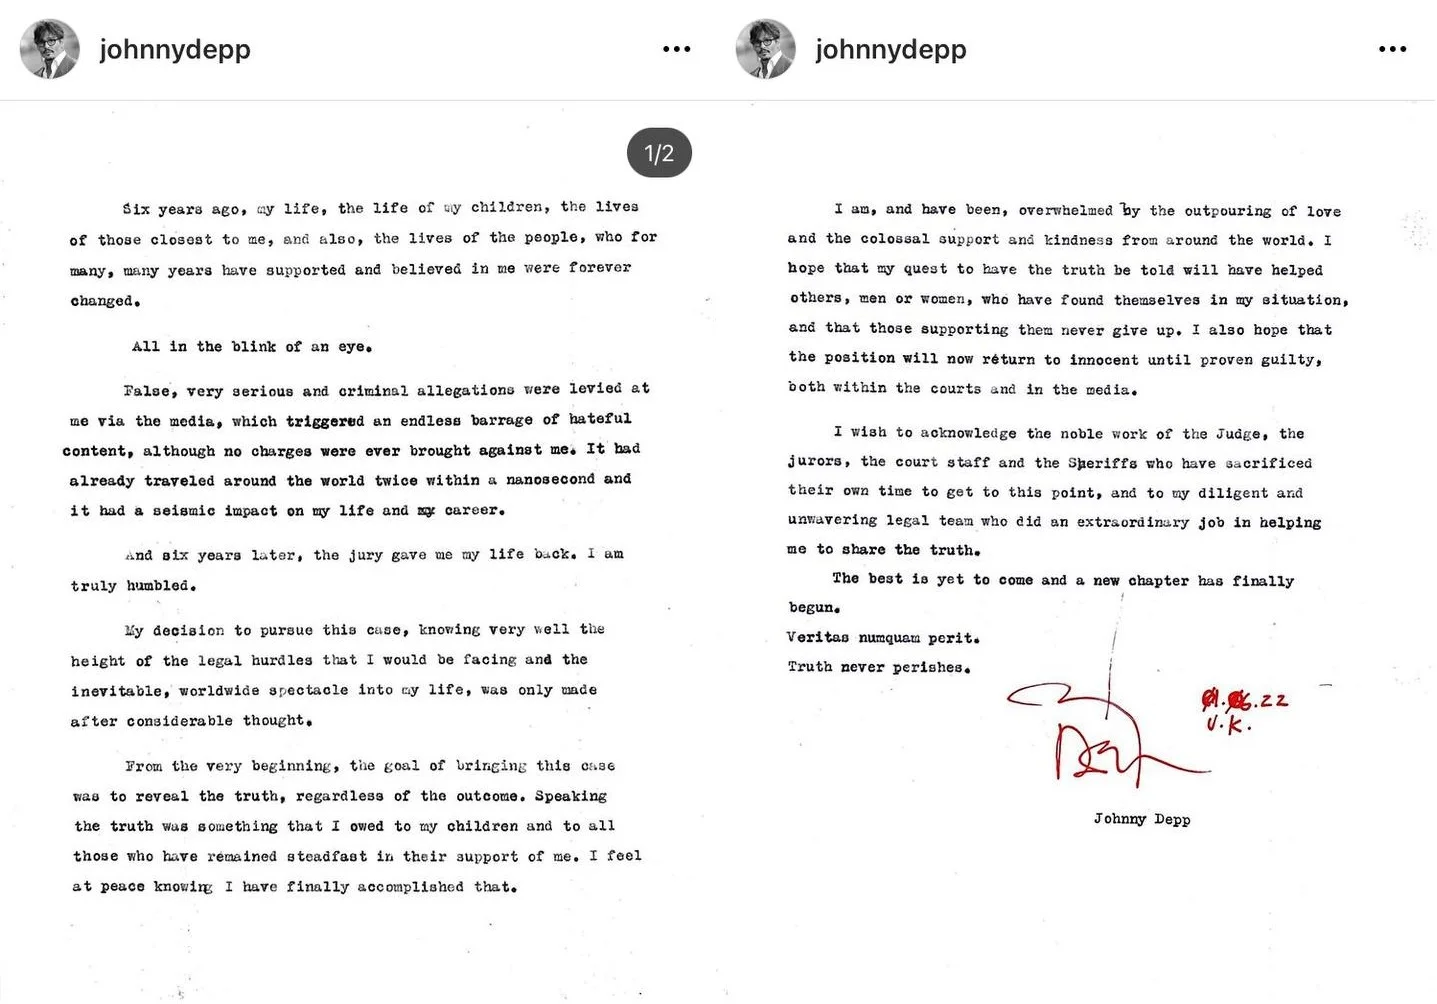 Джонни Депп прокомментировал свою победу в суде над Эмбер Хёрд - фото 1